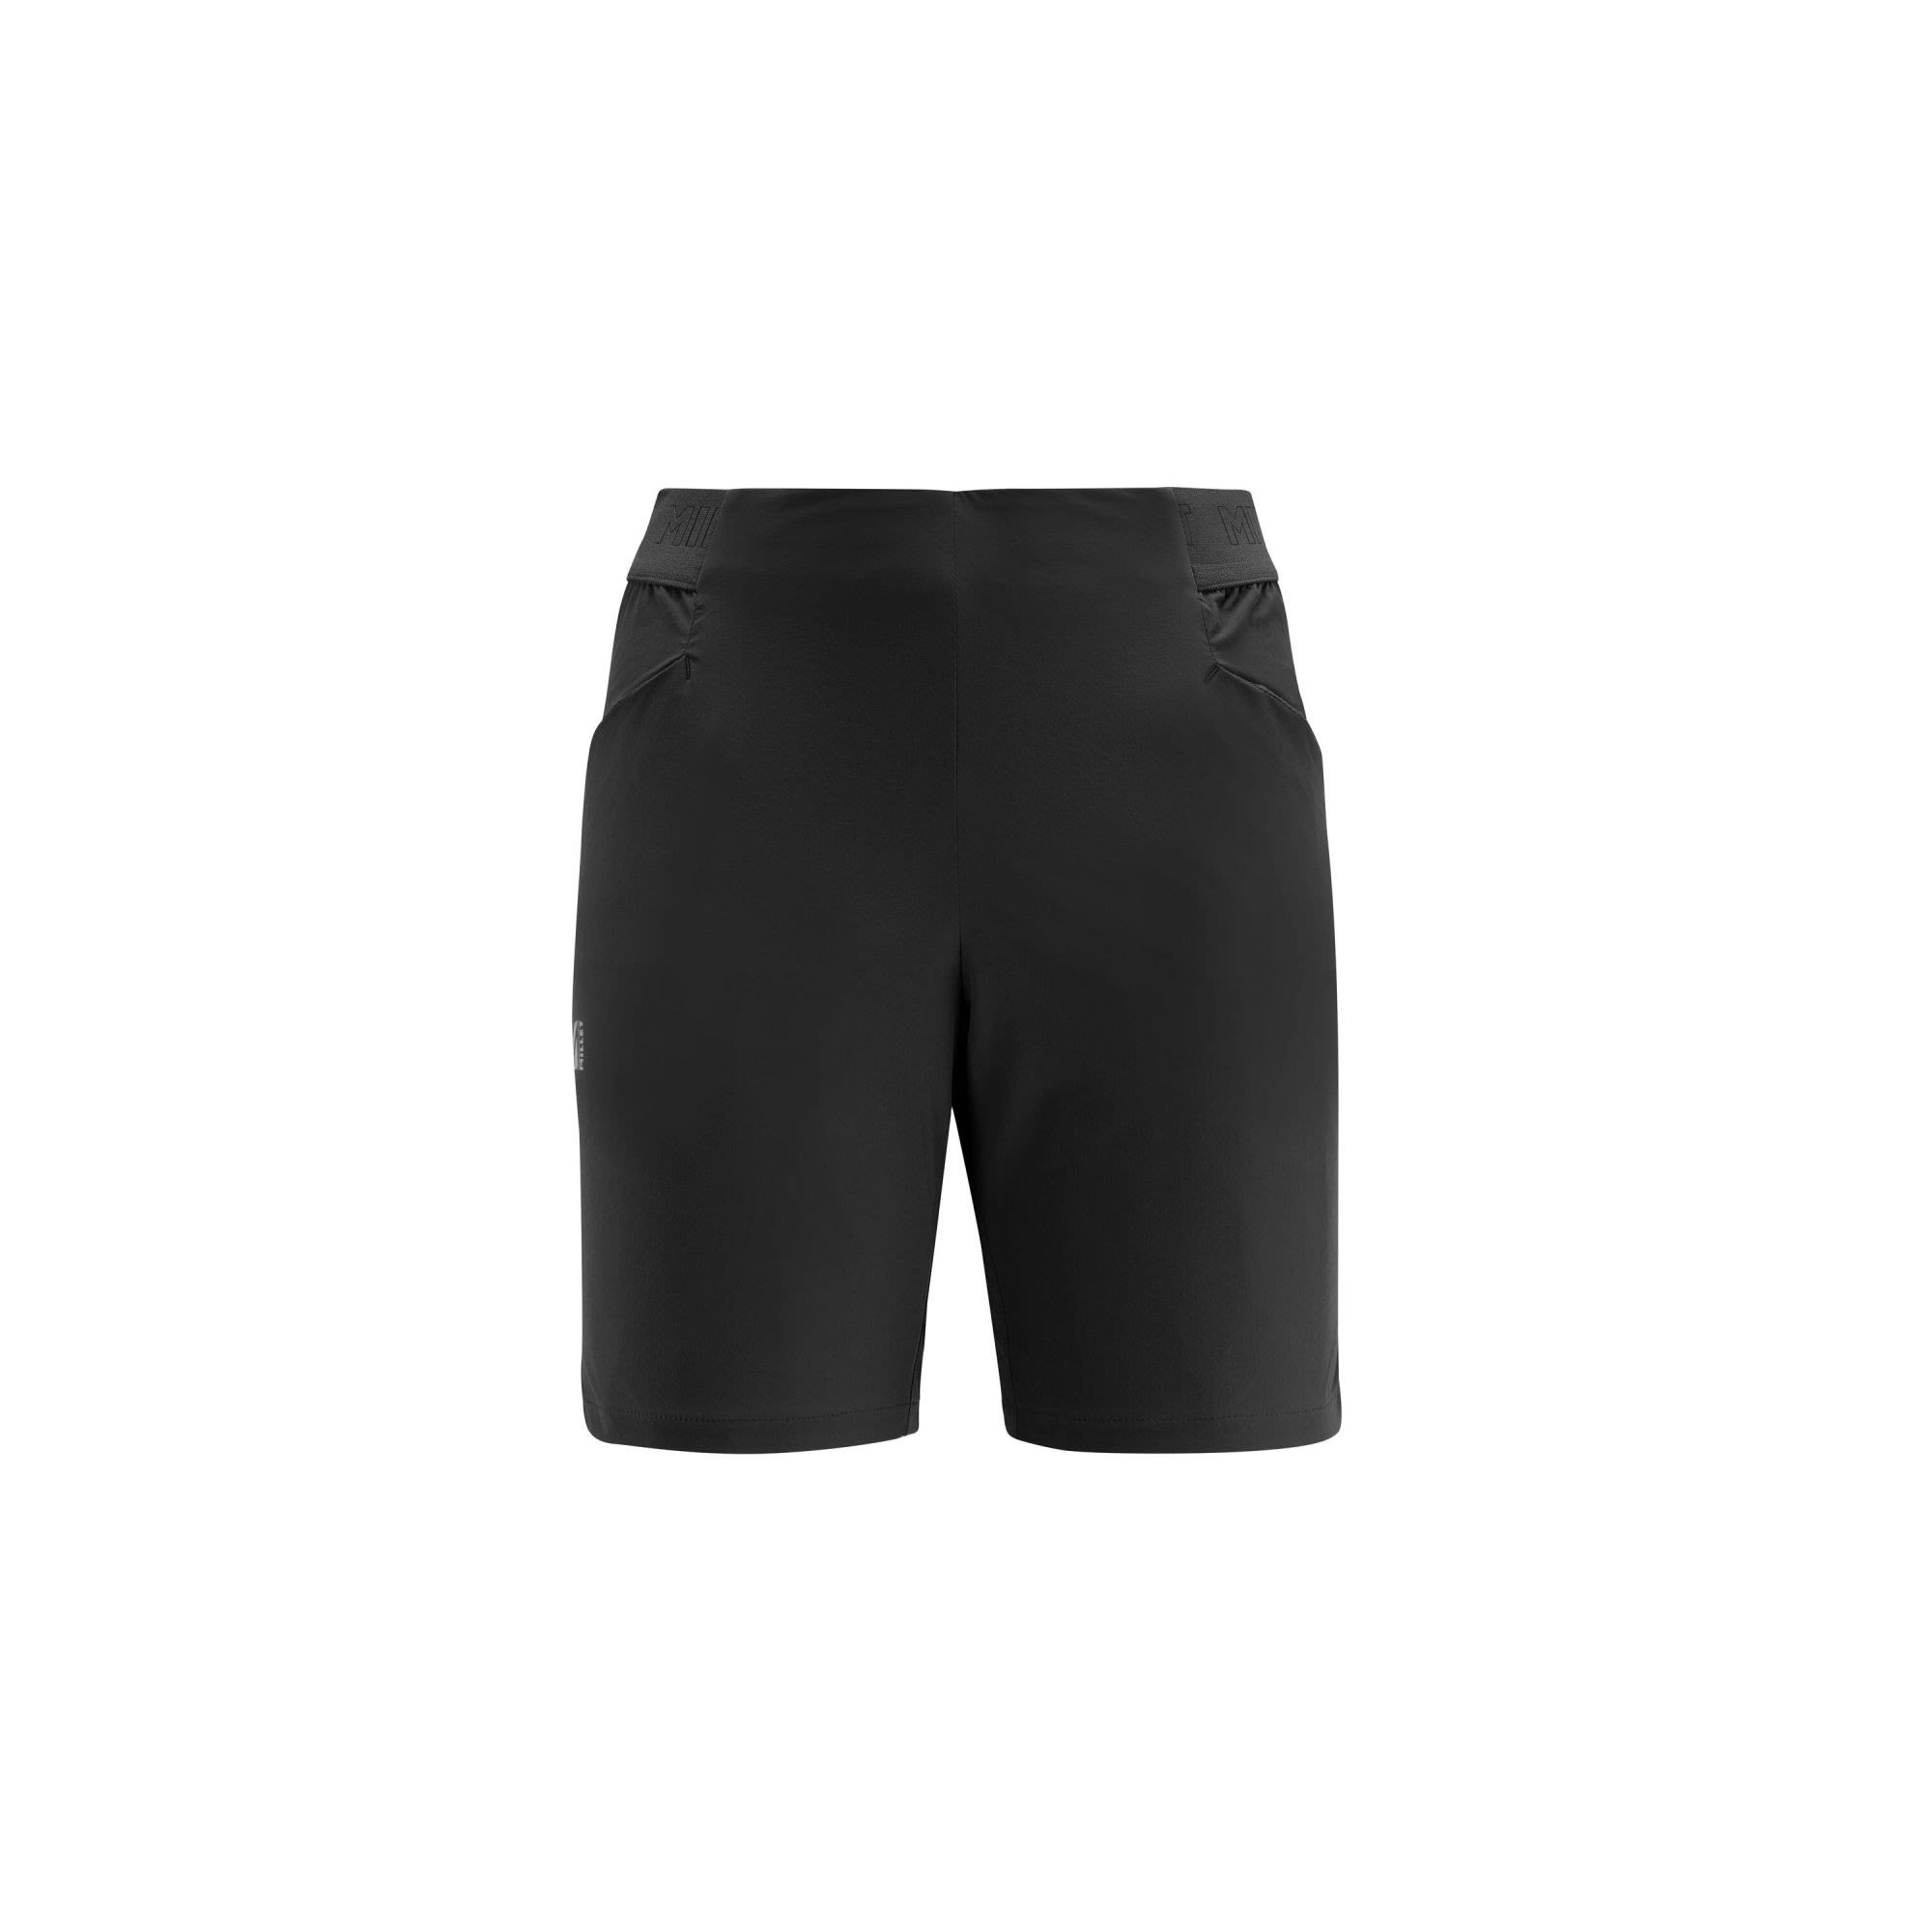 Millet LTK Speed Short Schwarz- Female Shorts- Grsse M - Farbe Black - Noir